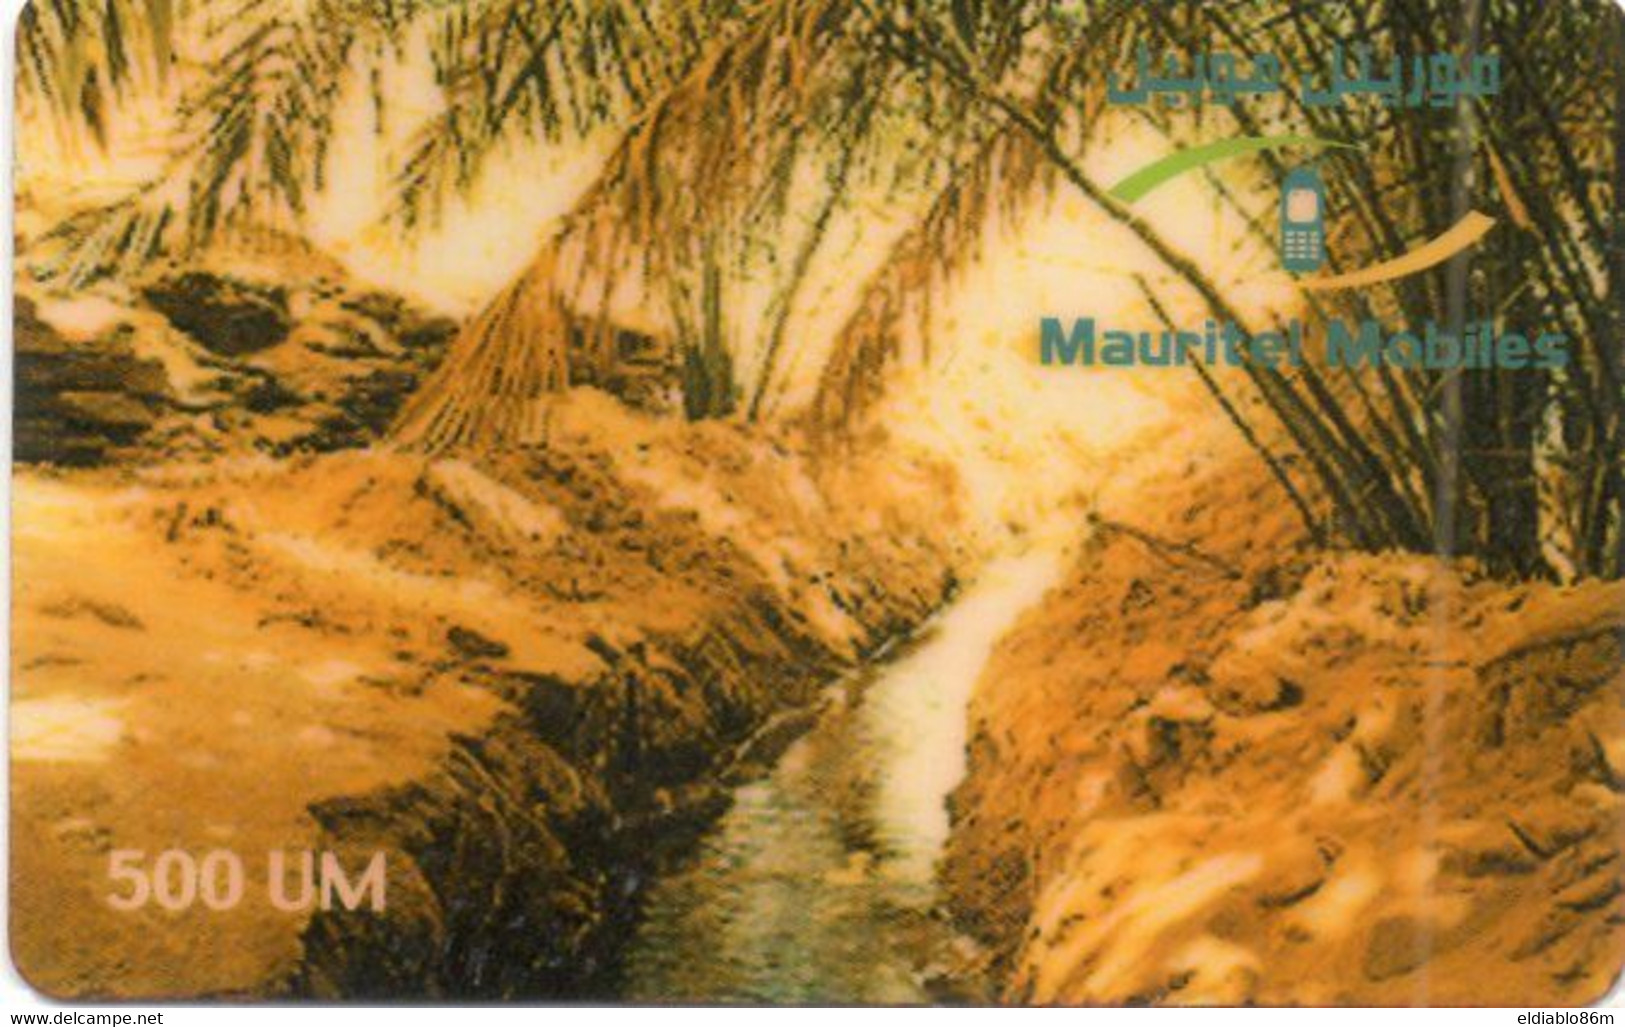 MAURITANIA - PREPAID - MAURITEL MOBILES - OASI - 31/12/2002 - Mauritanië